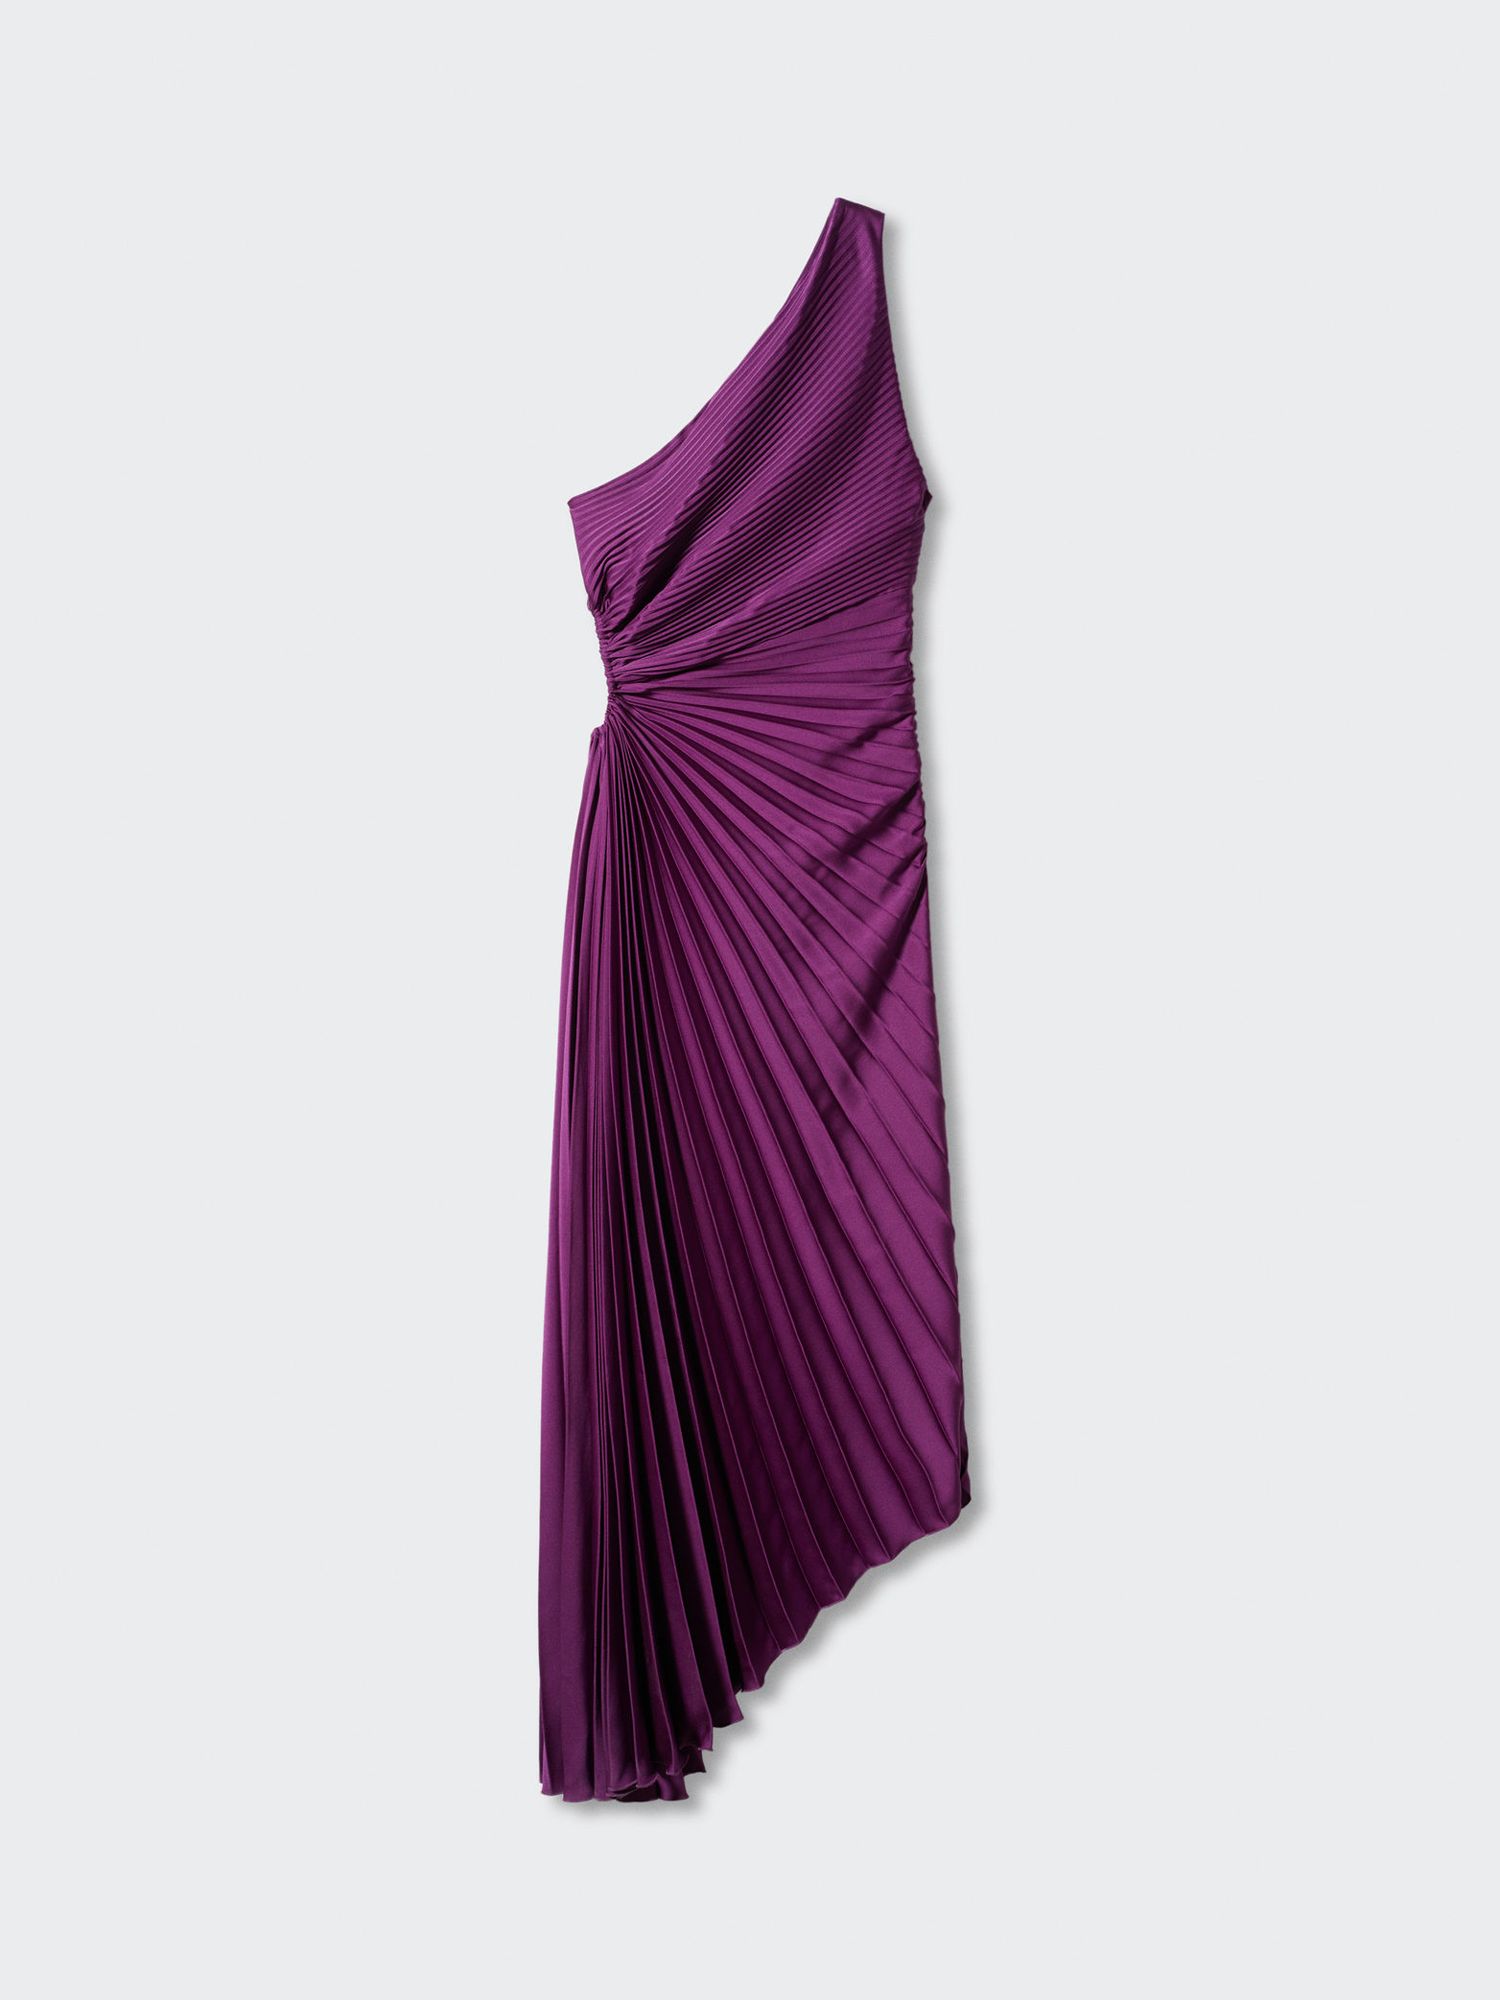 Mango Claudia Asymmetrical Pleated Dress, Medium Purple, 6